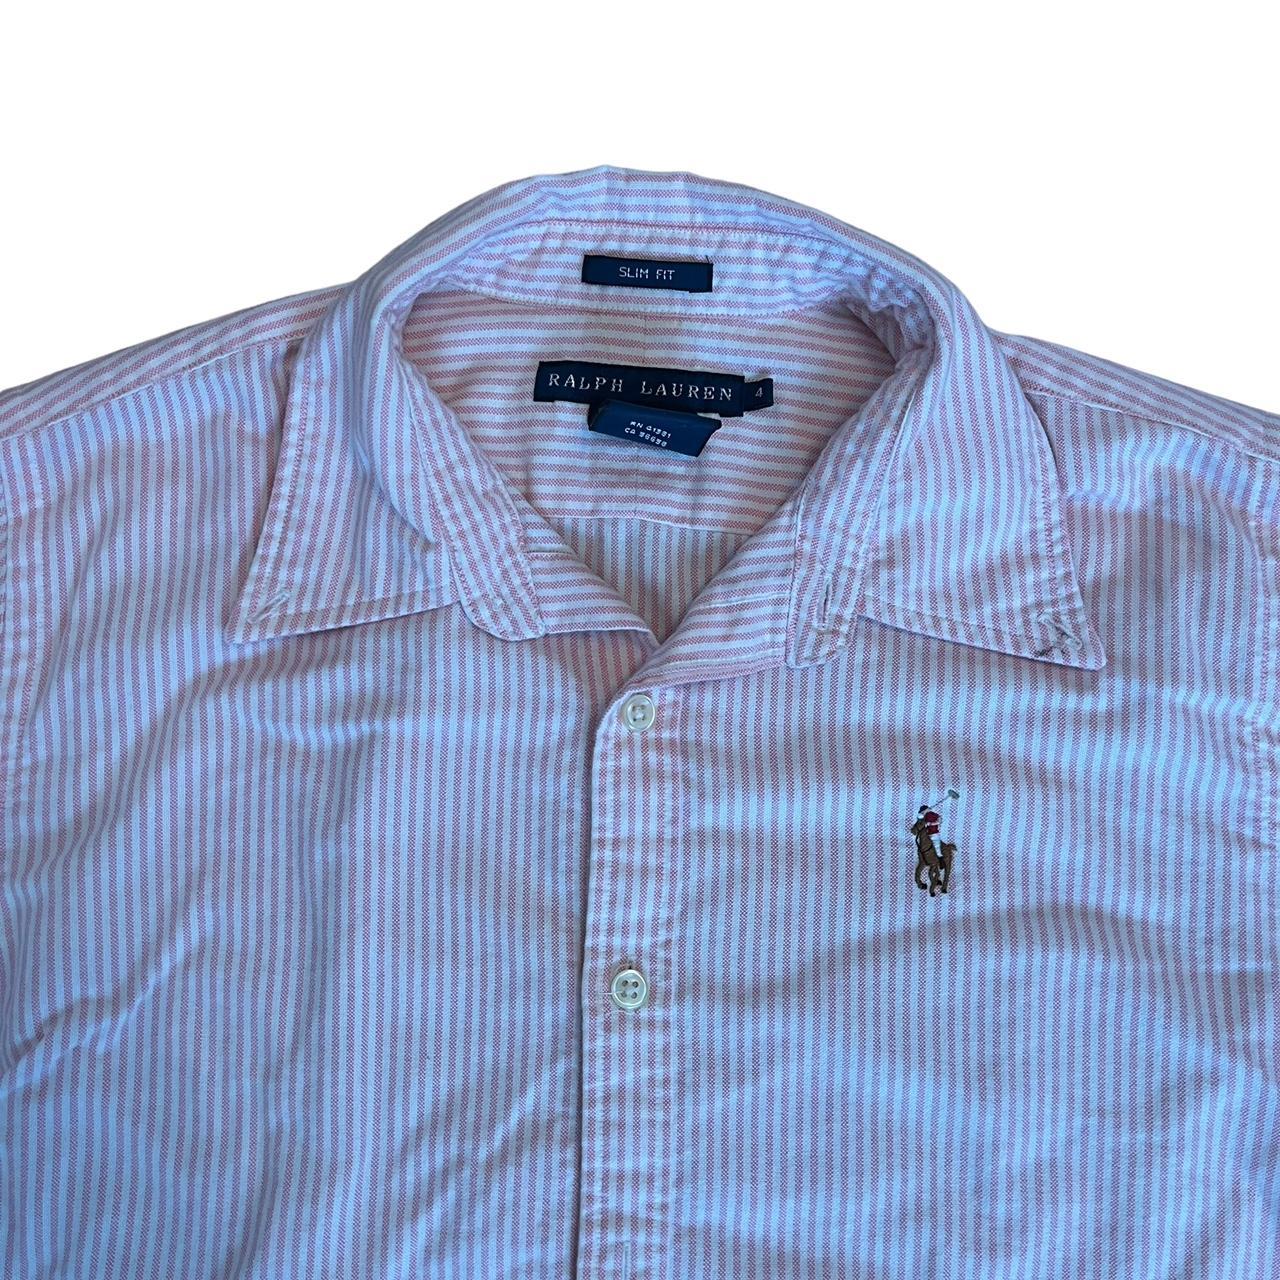 Vintage Ralph Lauren shirt Pit to pit - Length - Depop